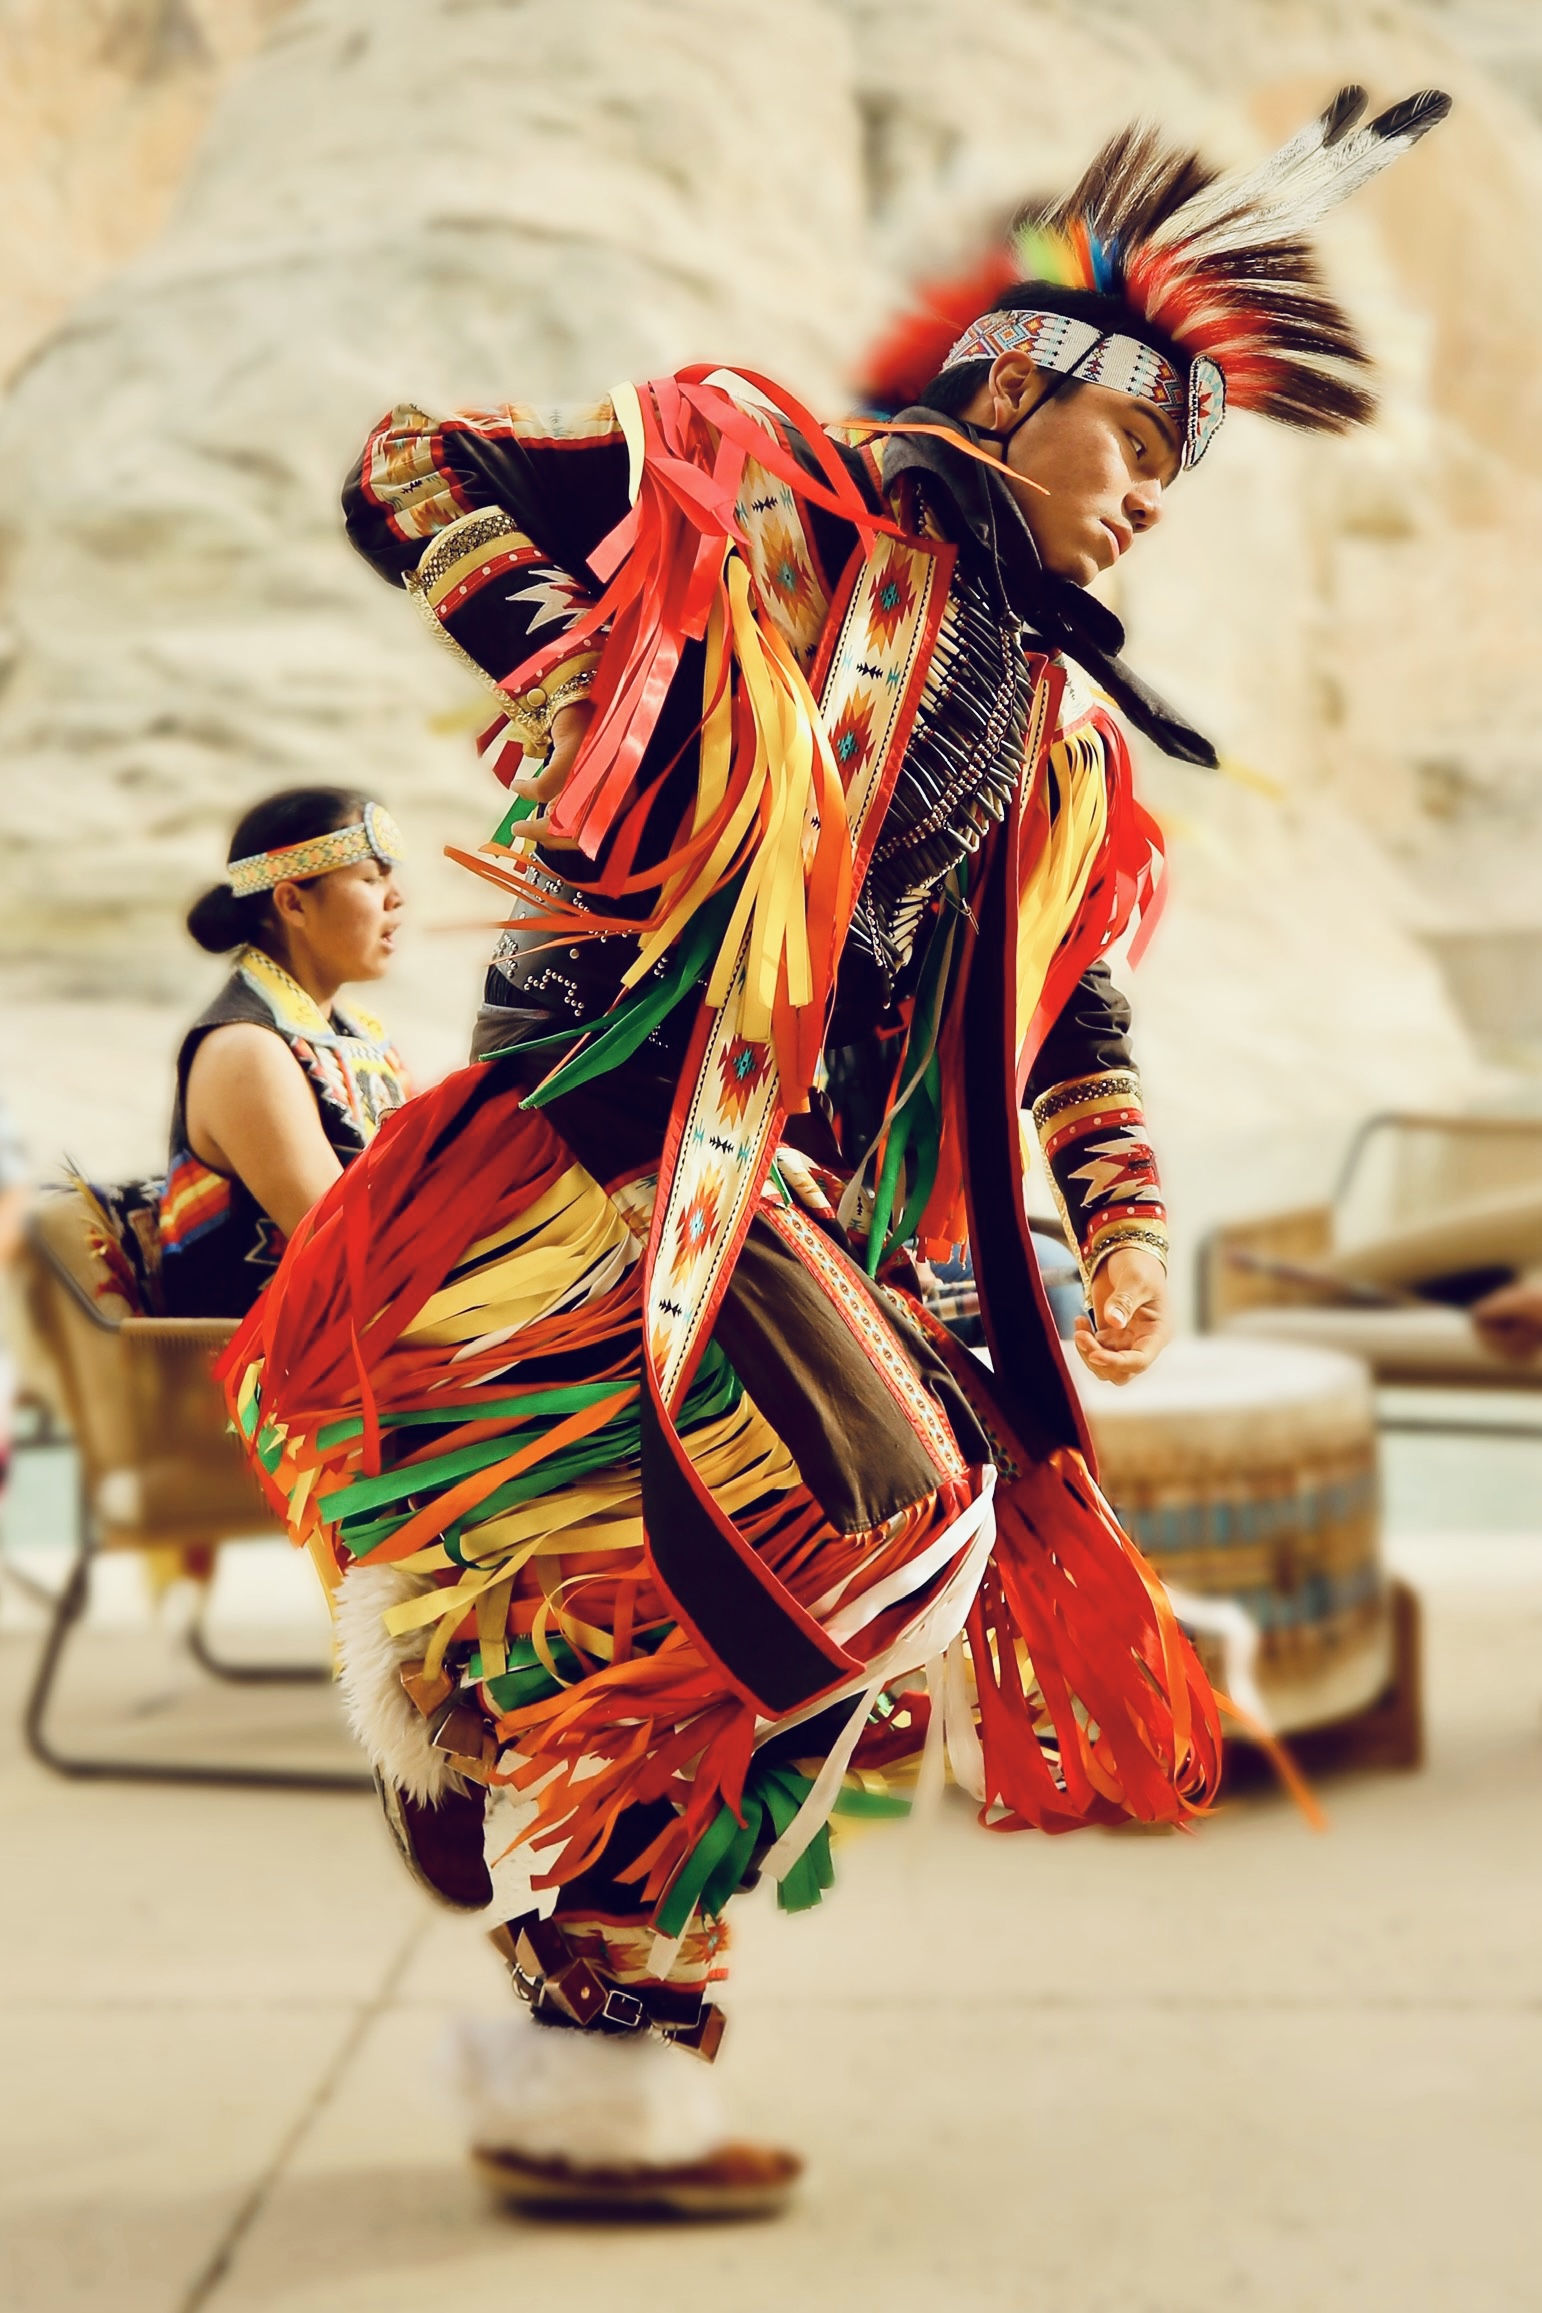 A Native American dancing